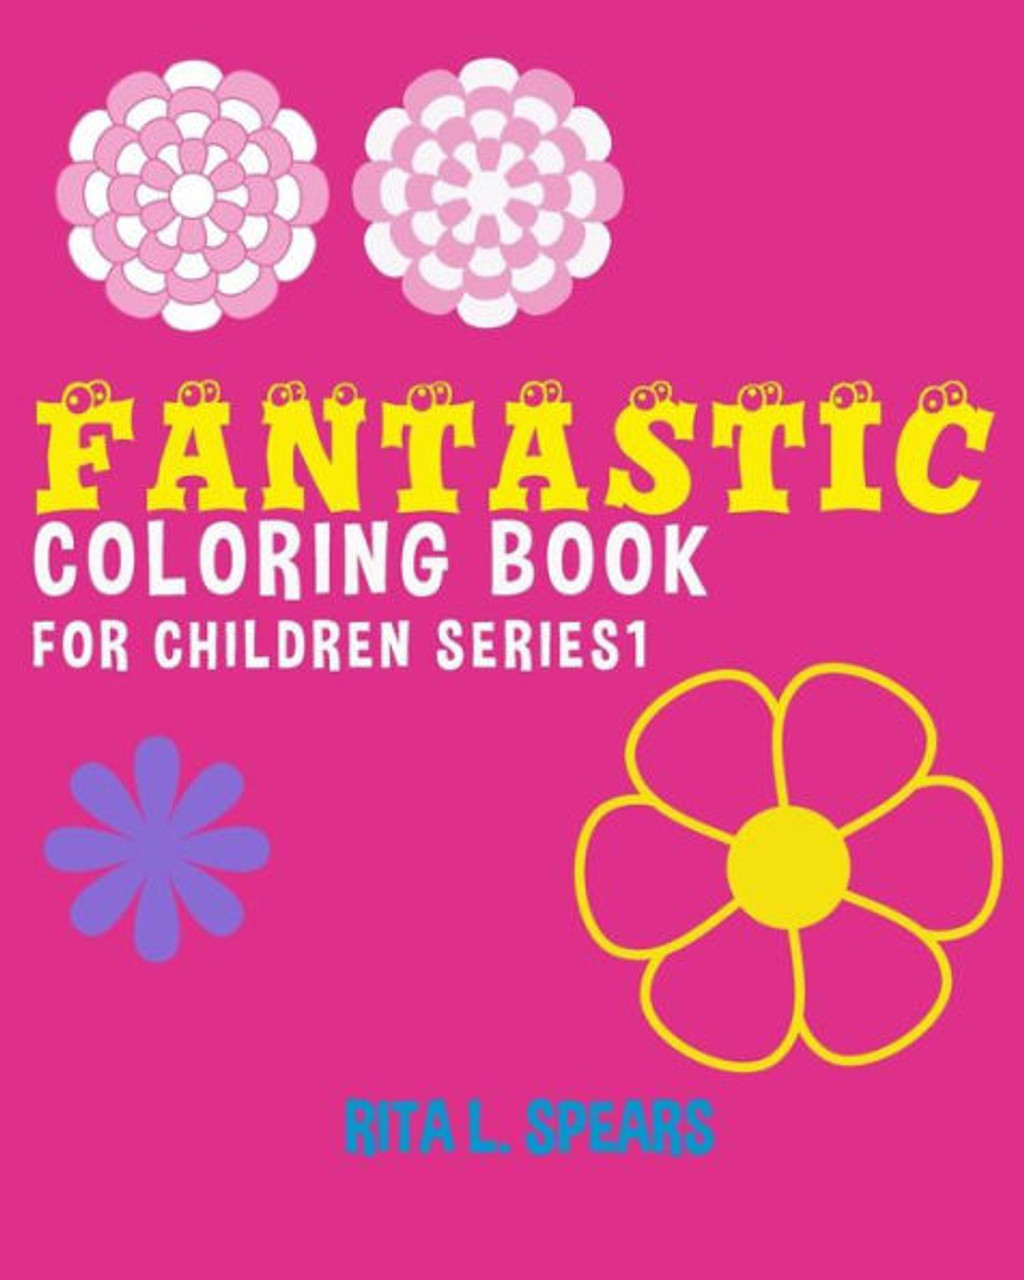 Fantastic Coloring Book For Children Series1 (Happy Coloring Books Kids) -  Rita L. Spears - 9781541047785